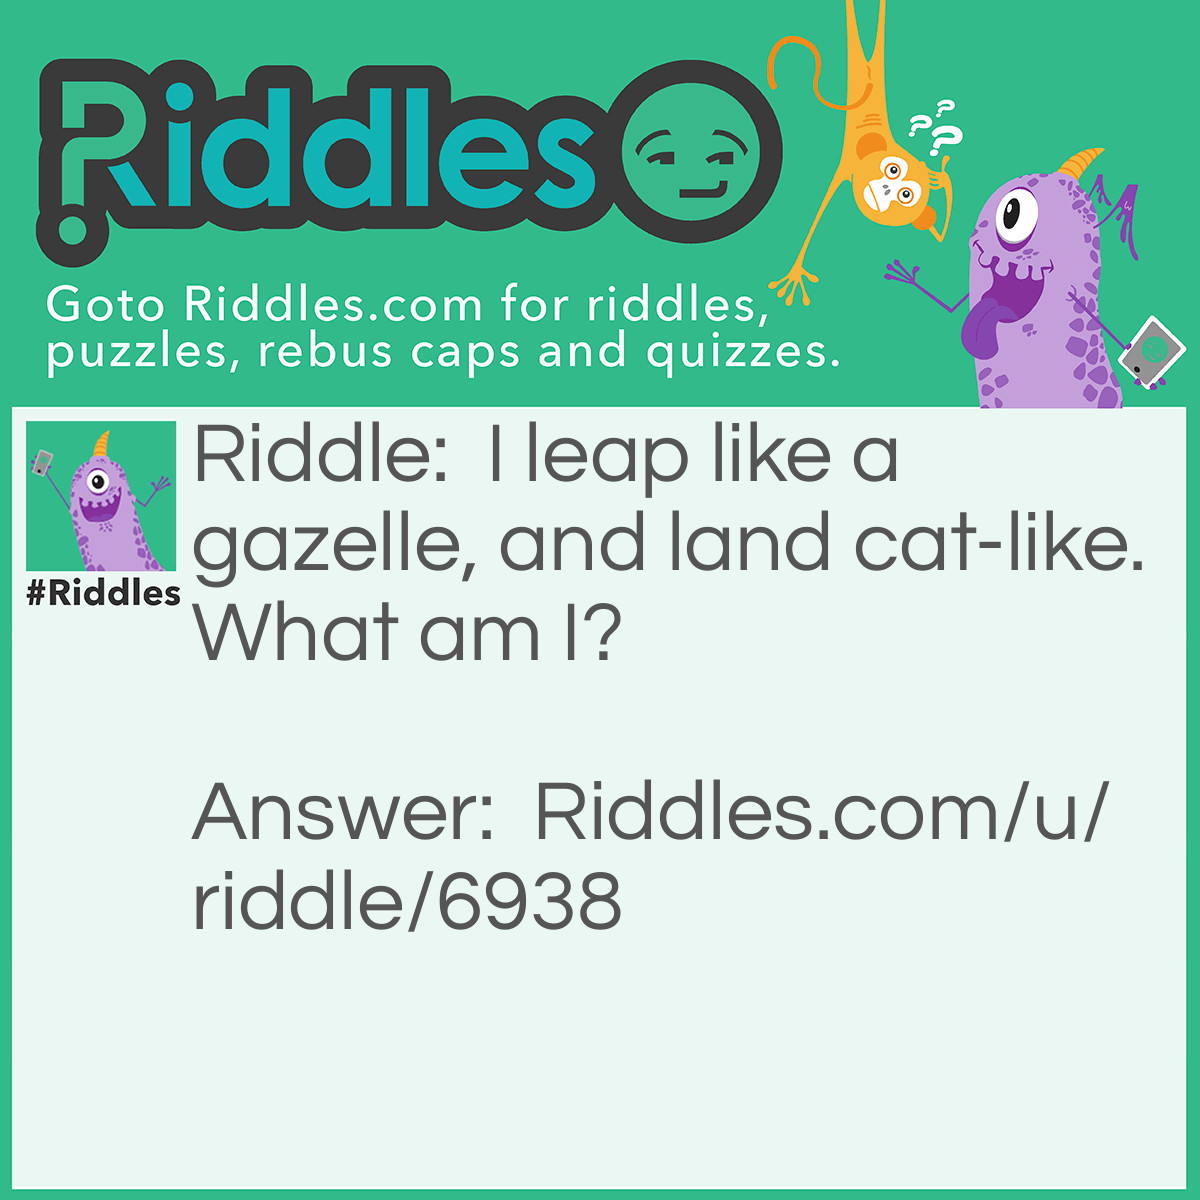 Riddle: I leap like a gazelle, and land cat-like. What am I? Answer: A Dirt-bike.